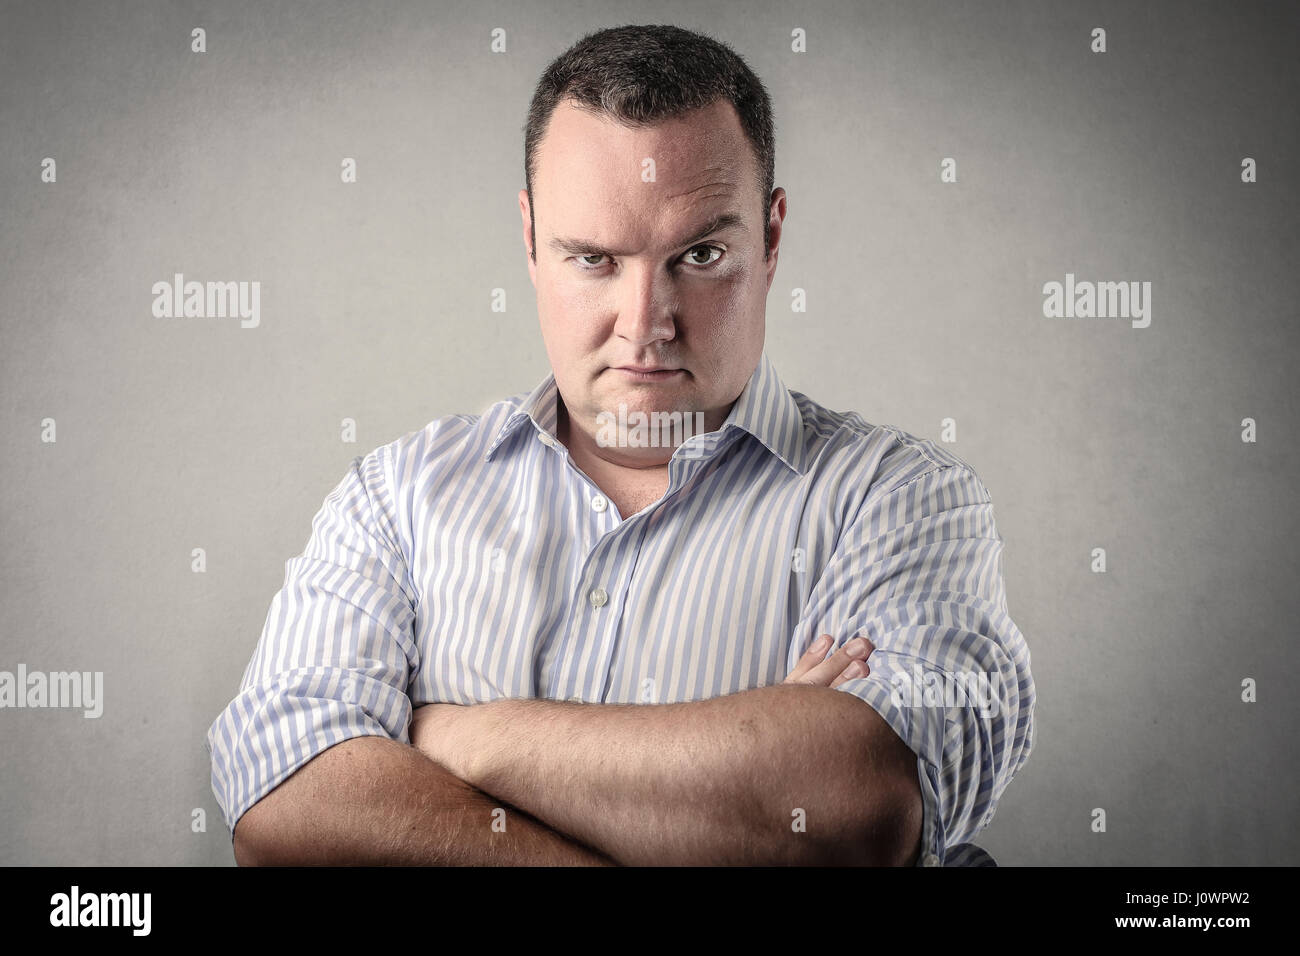 Fat man looking serious Stock Photo